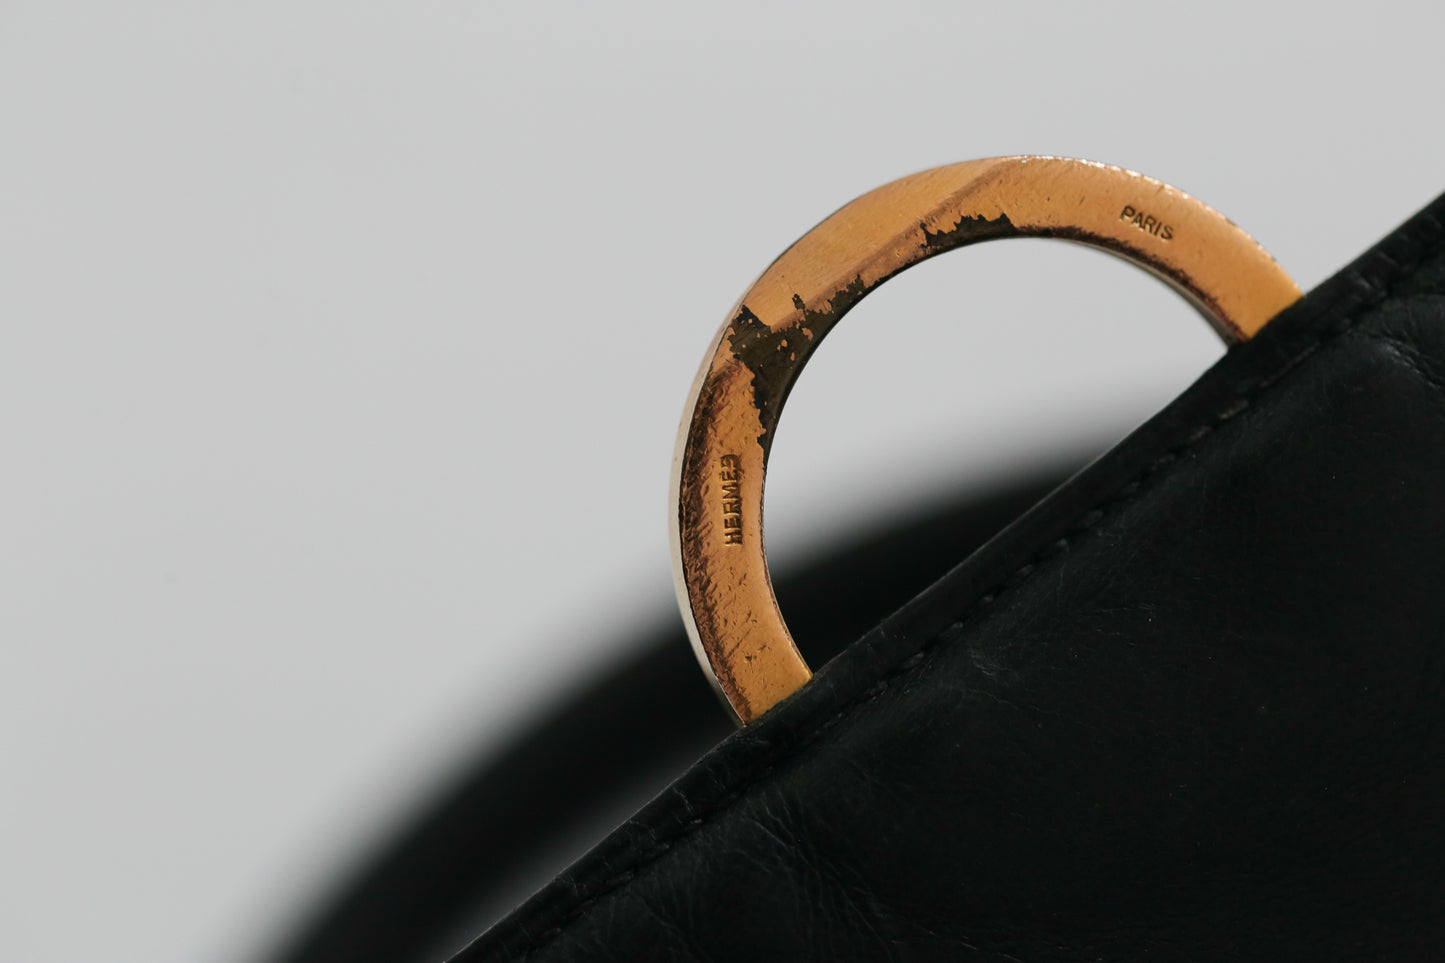 Hermès sac à main modèle ring en box noir